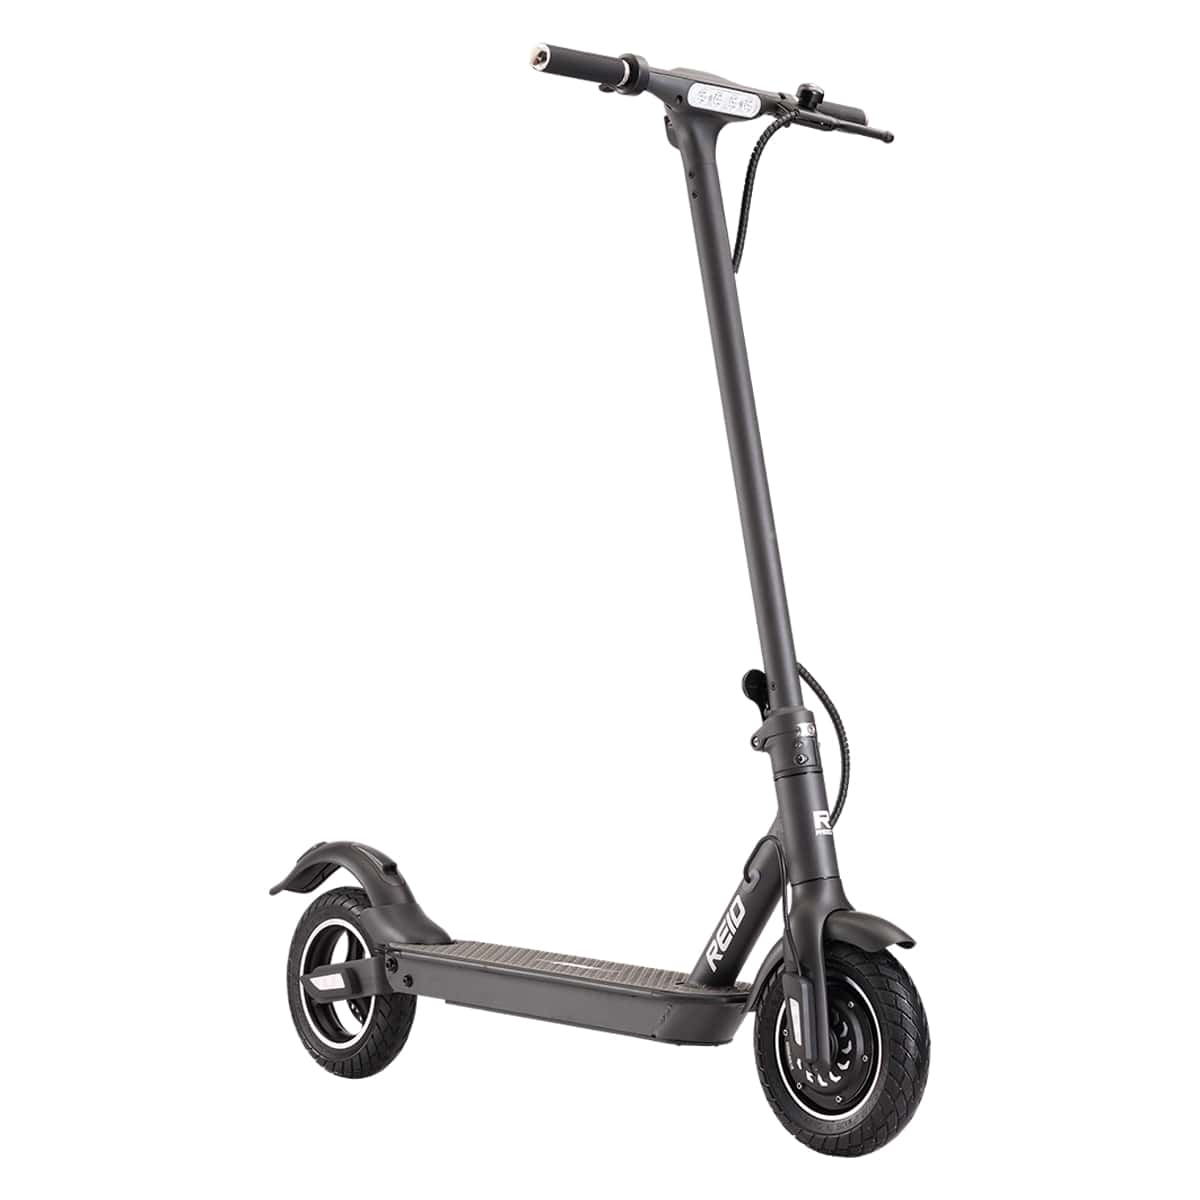 Reid E4 Plus electric scooter